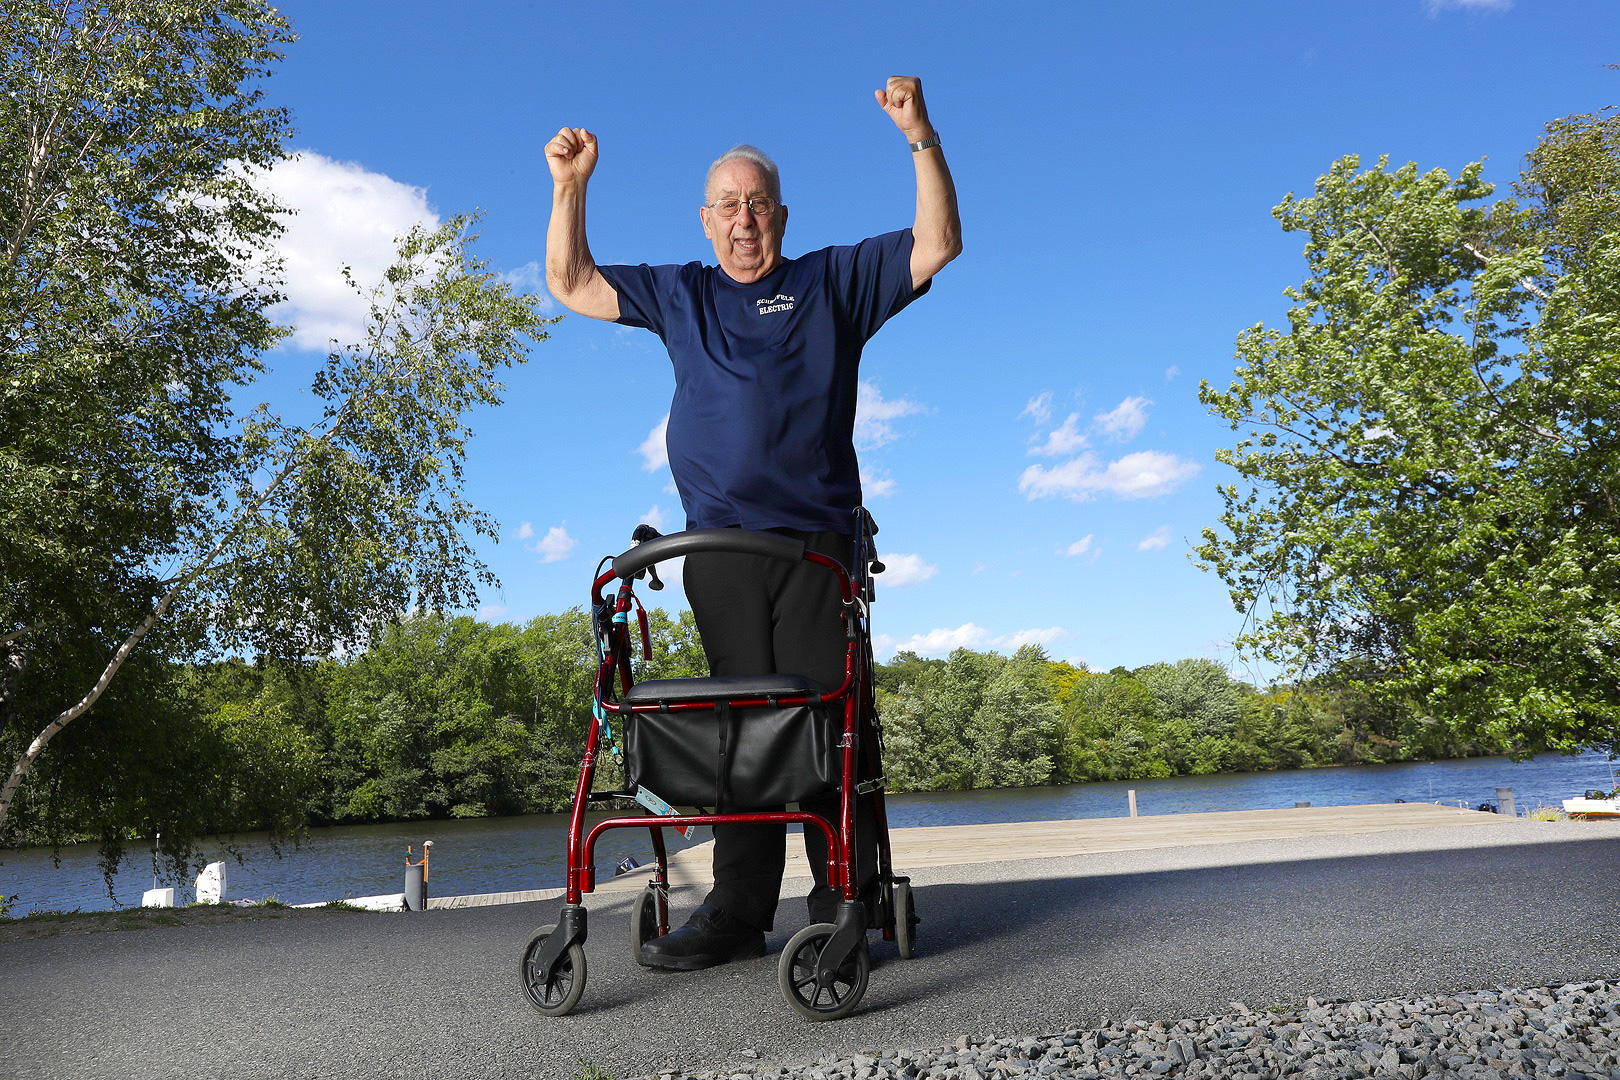 Military veteran and avid rower "Shuffles shows his vigor during a portrait shoot. .